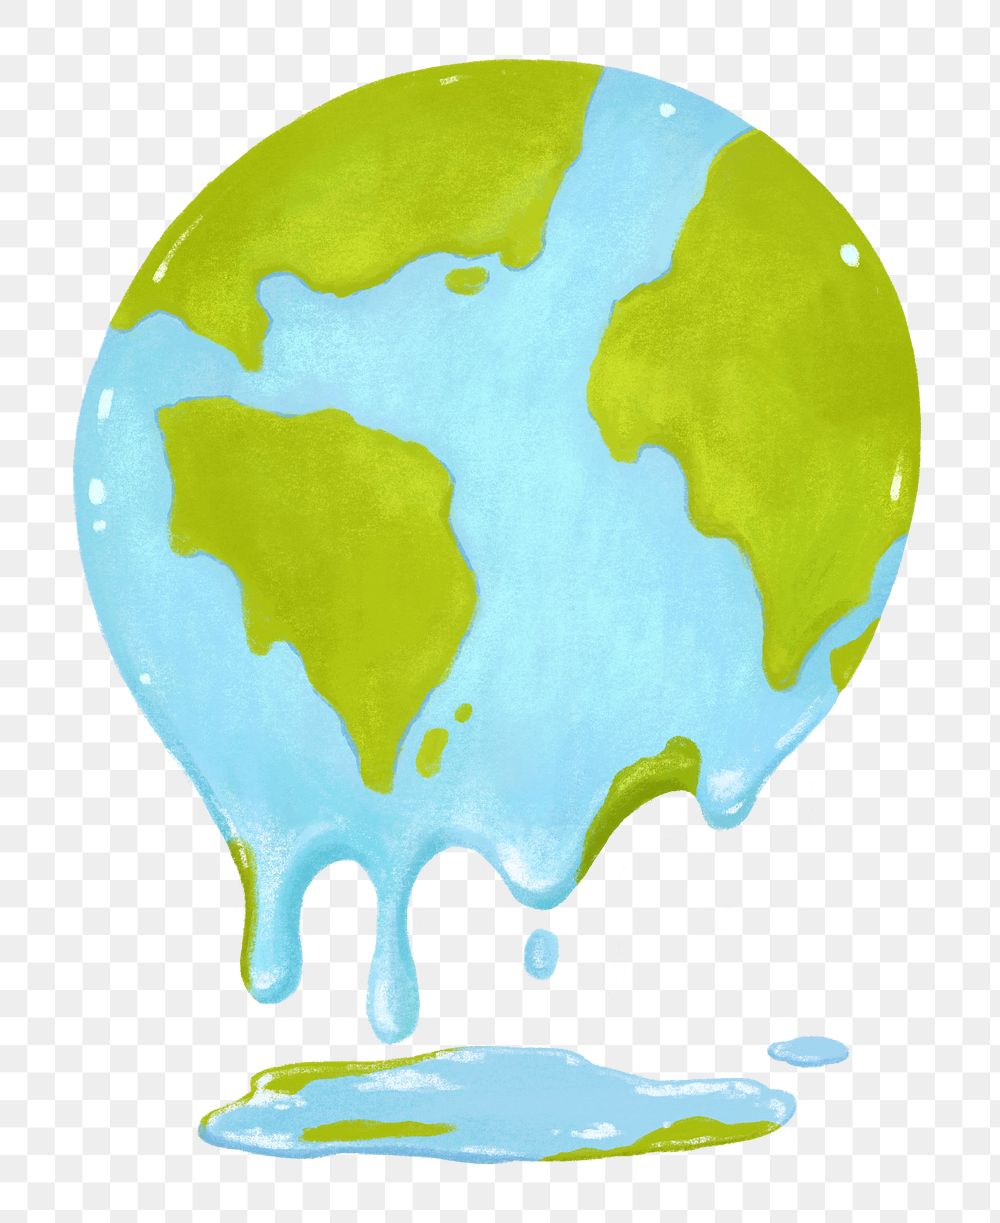 Melting globe png, environment illustration, transparent background